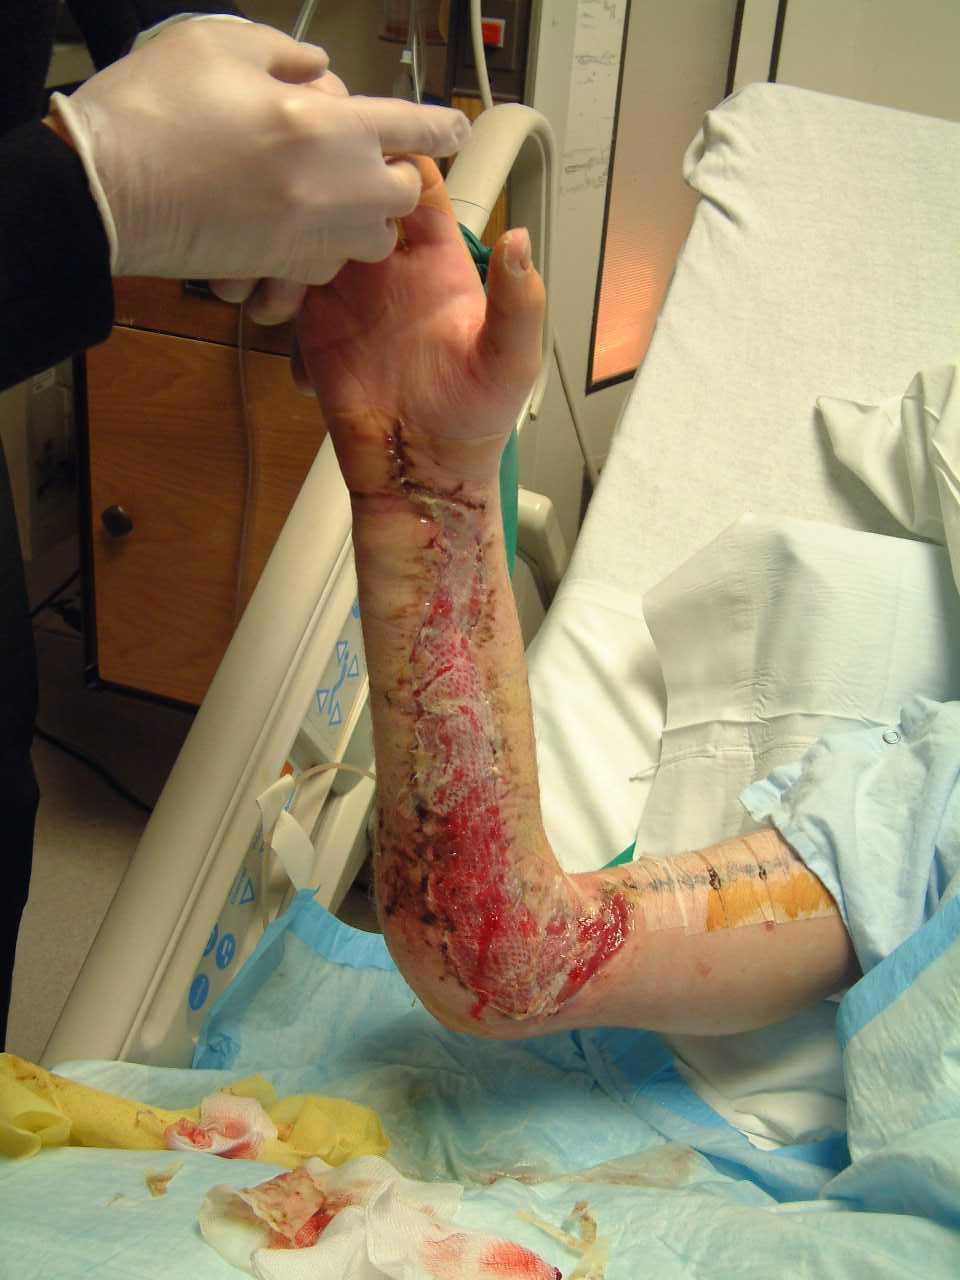 Case: Necrotizing Fasciitis Multiple surgeries to debride necrotic tissue, ICU support Six hyperbaric oxygen